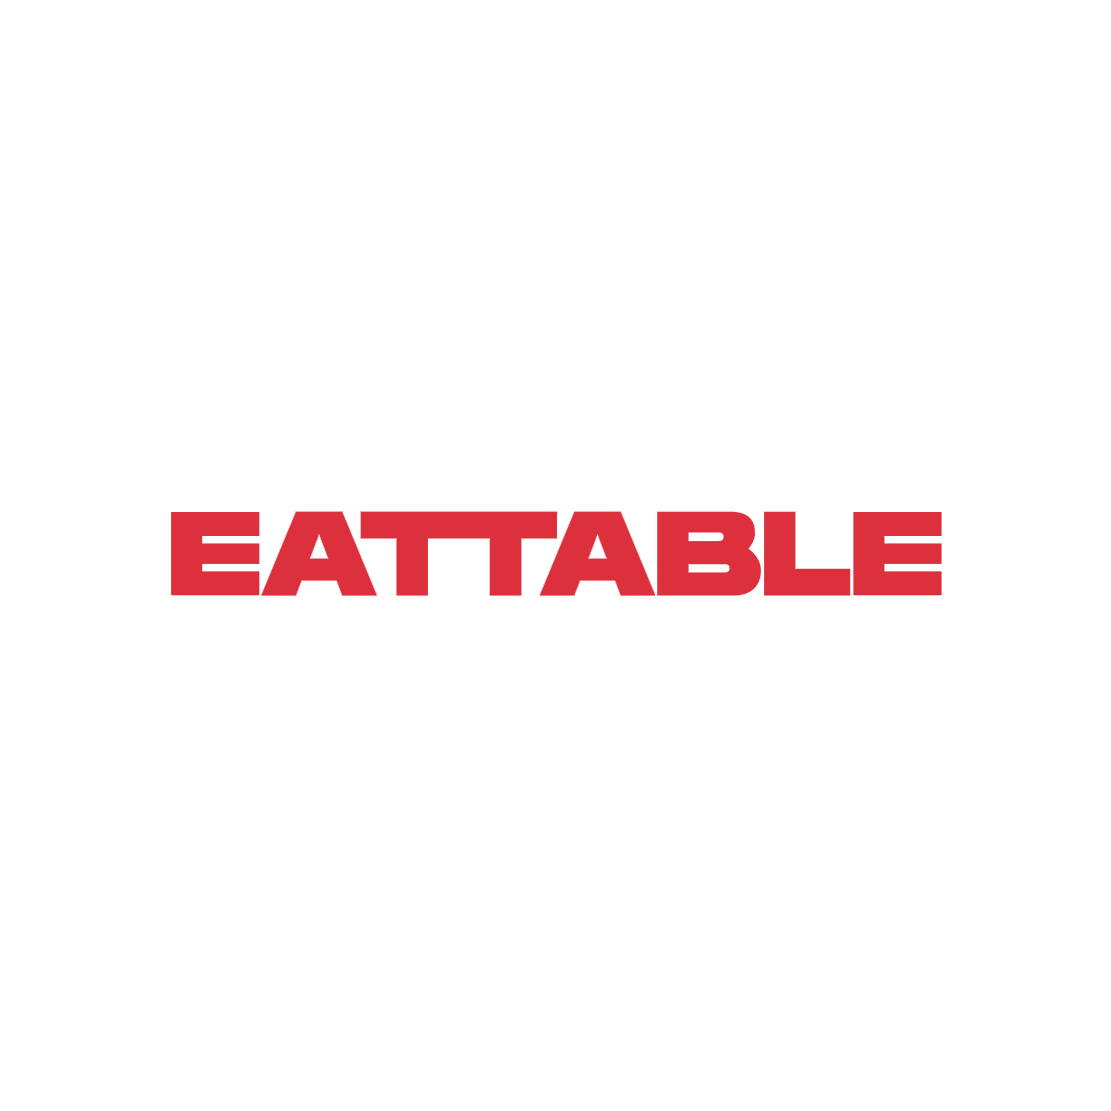 EATTABLE